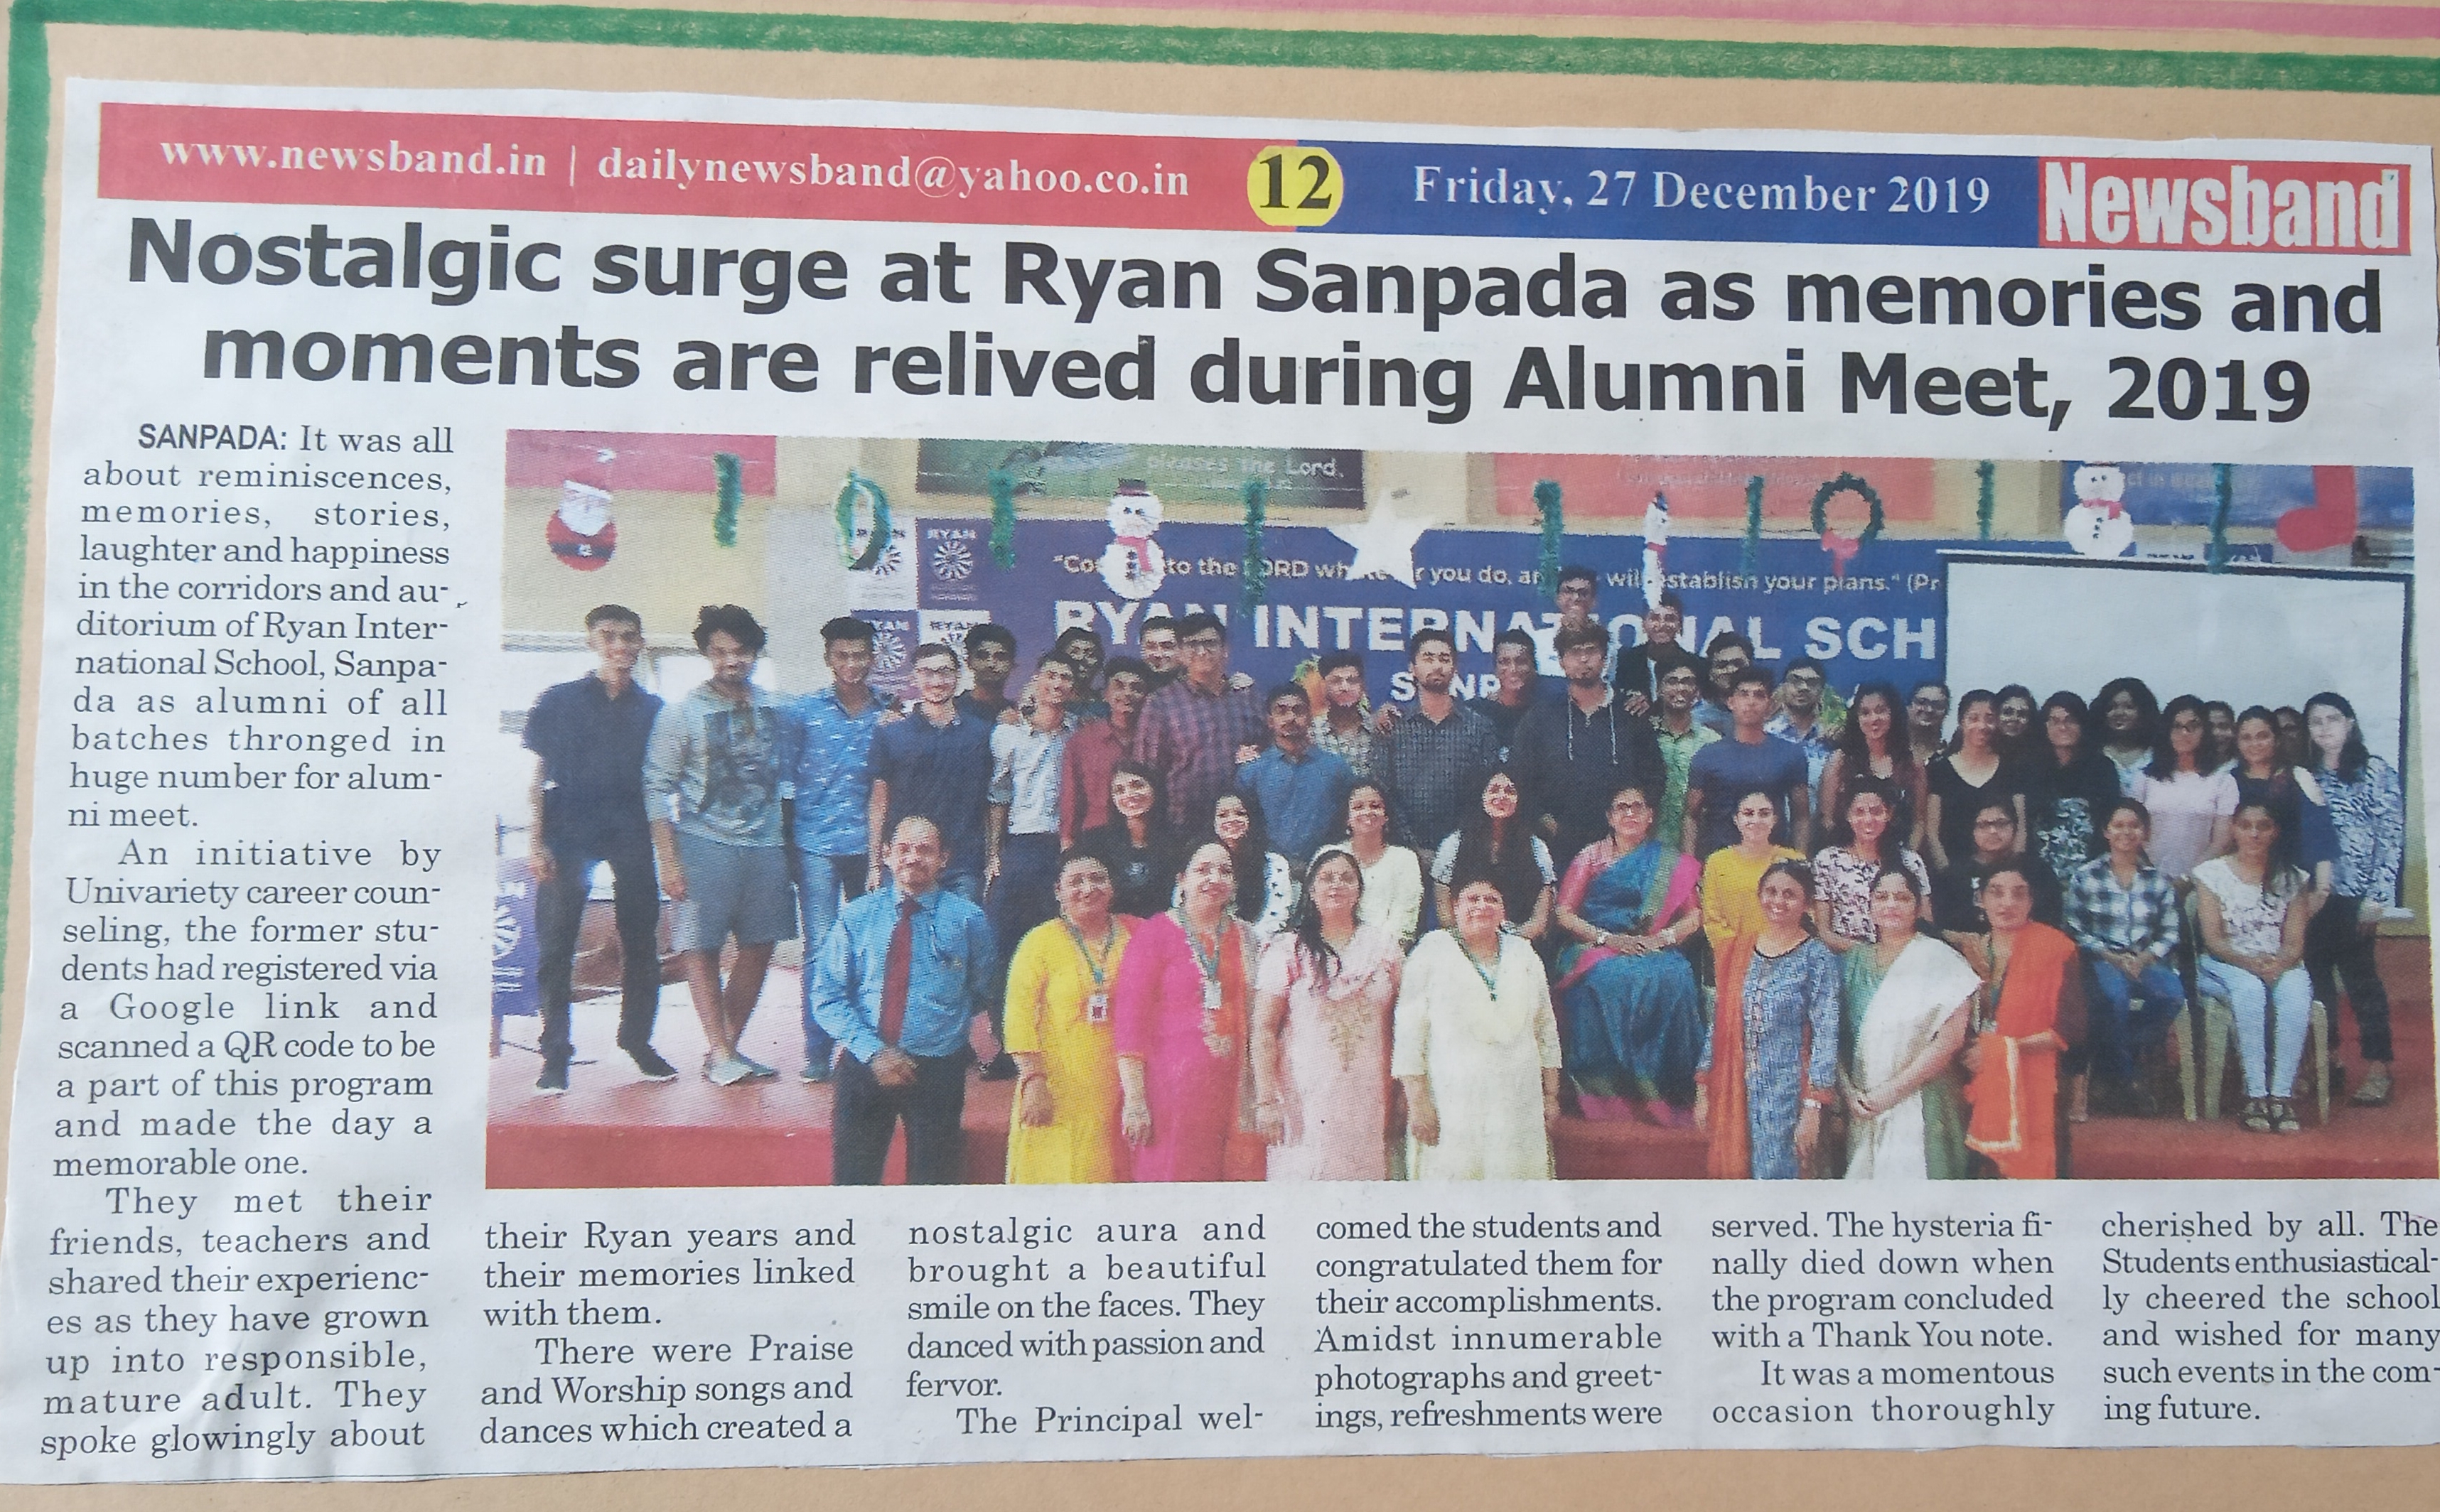 Alumni Meet featured in Newsband - Ryan International School, Sanpada